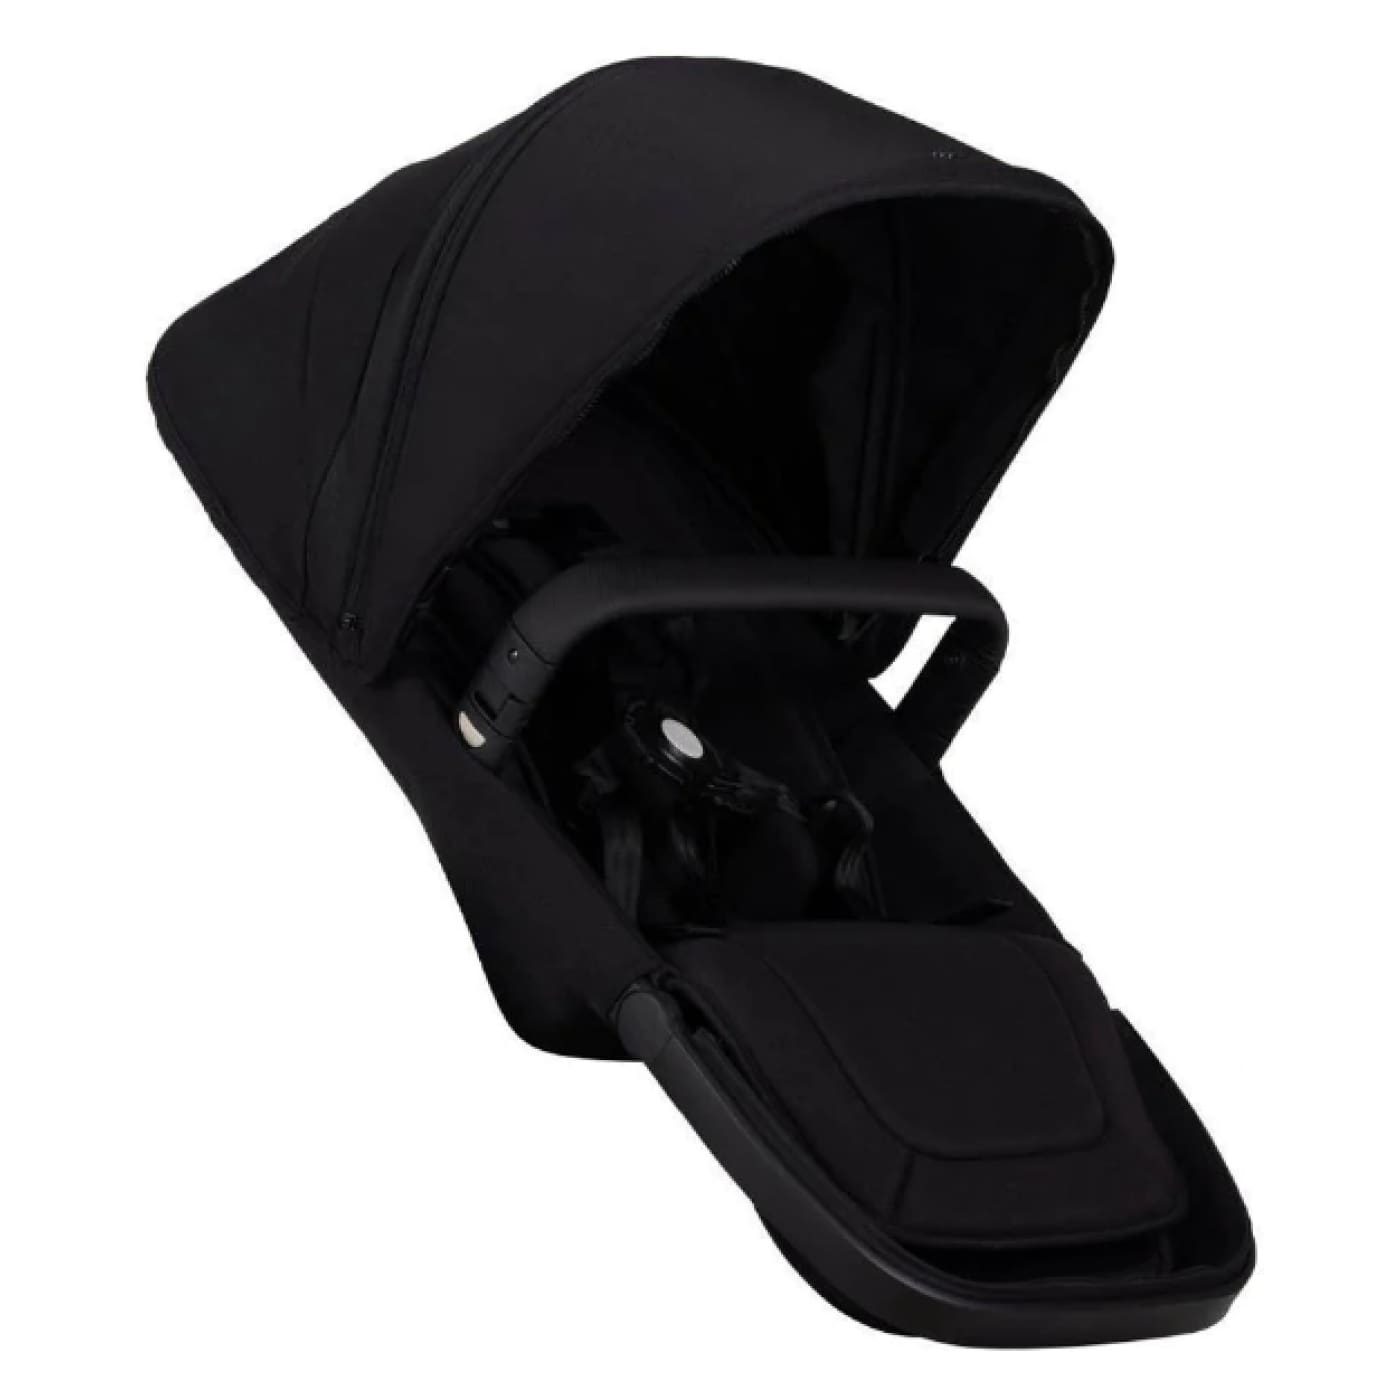 Joolz Geo3 Seat - Brilliant Black - Brilliant Black - PRAMS & STROLLERS - TODDLER SEATS/CONVERSION KITS